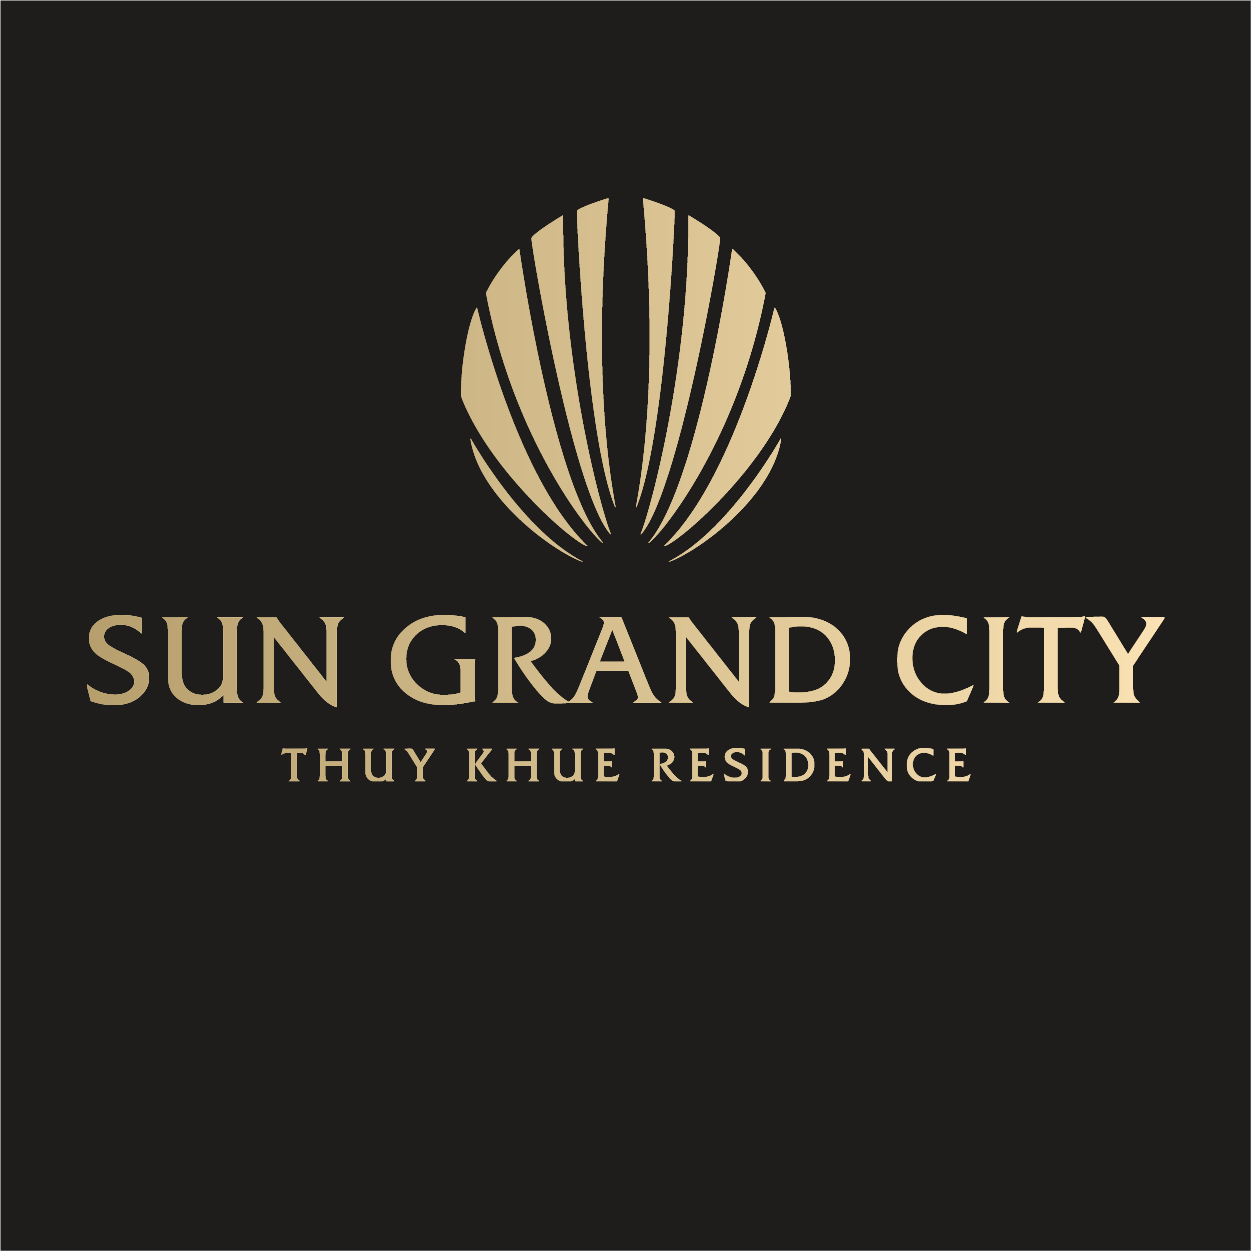 Image result for SUN GRAND CITY THUY KHUE RESIDENCE